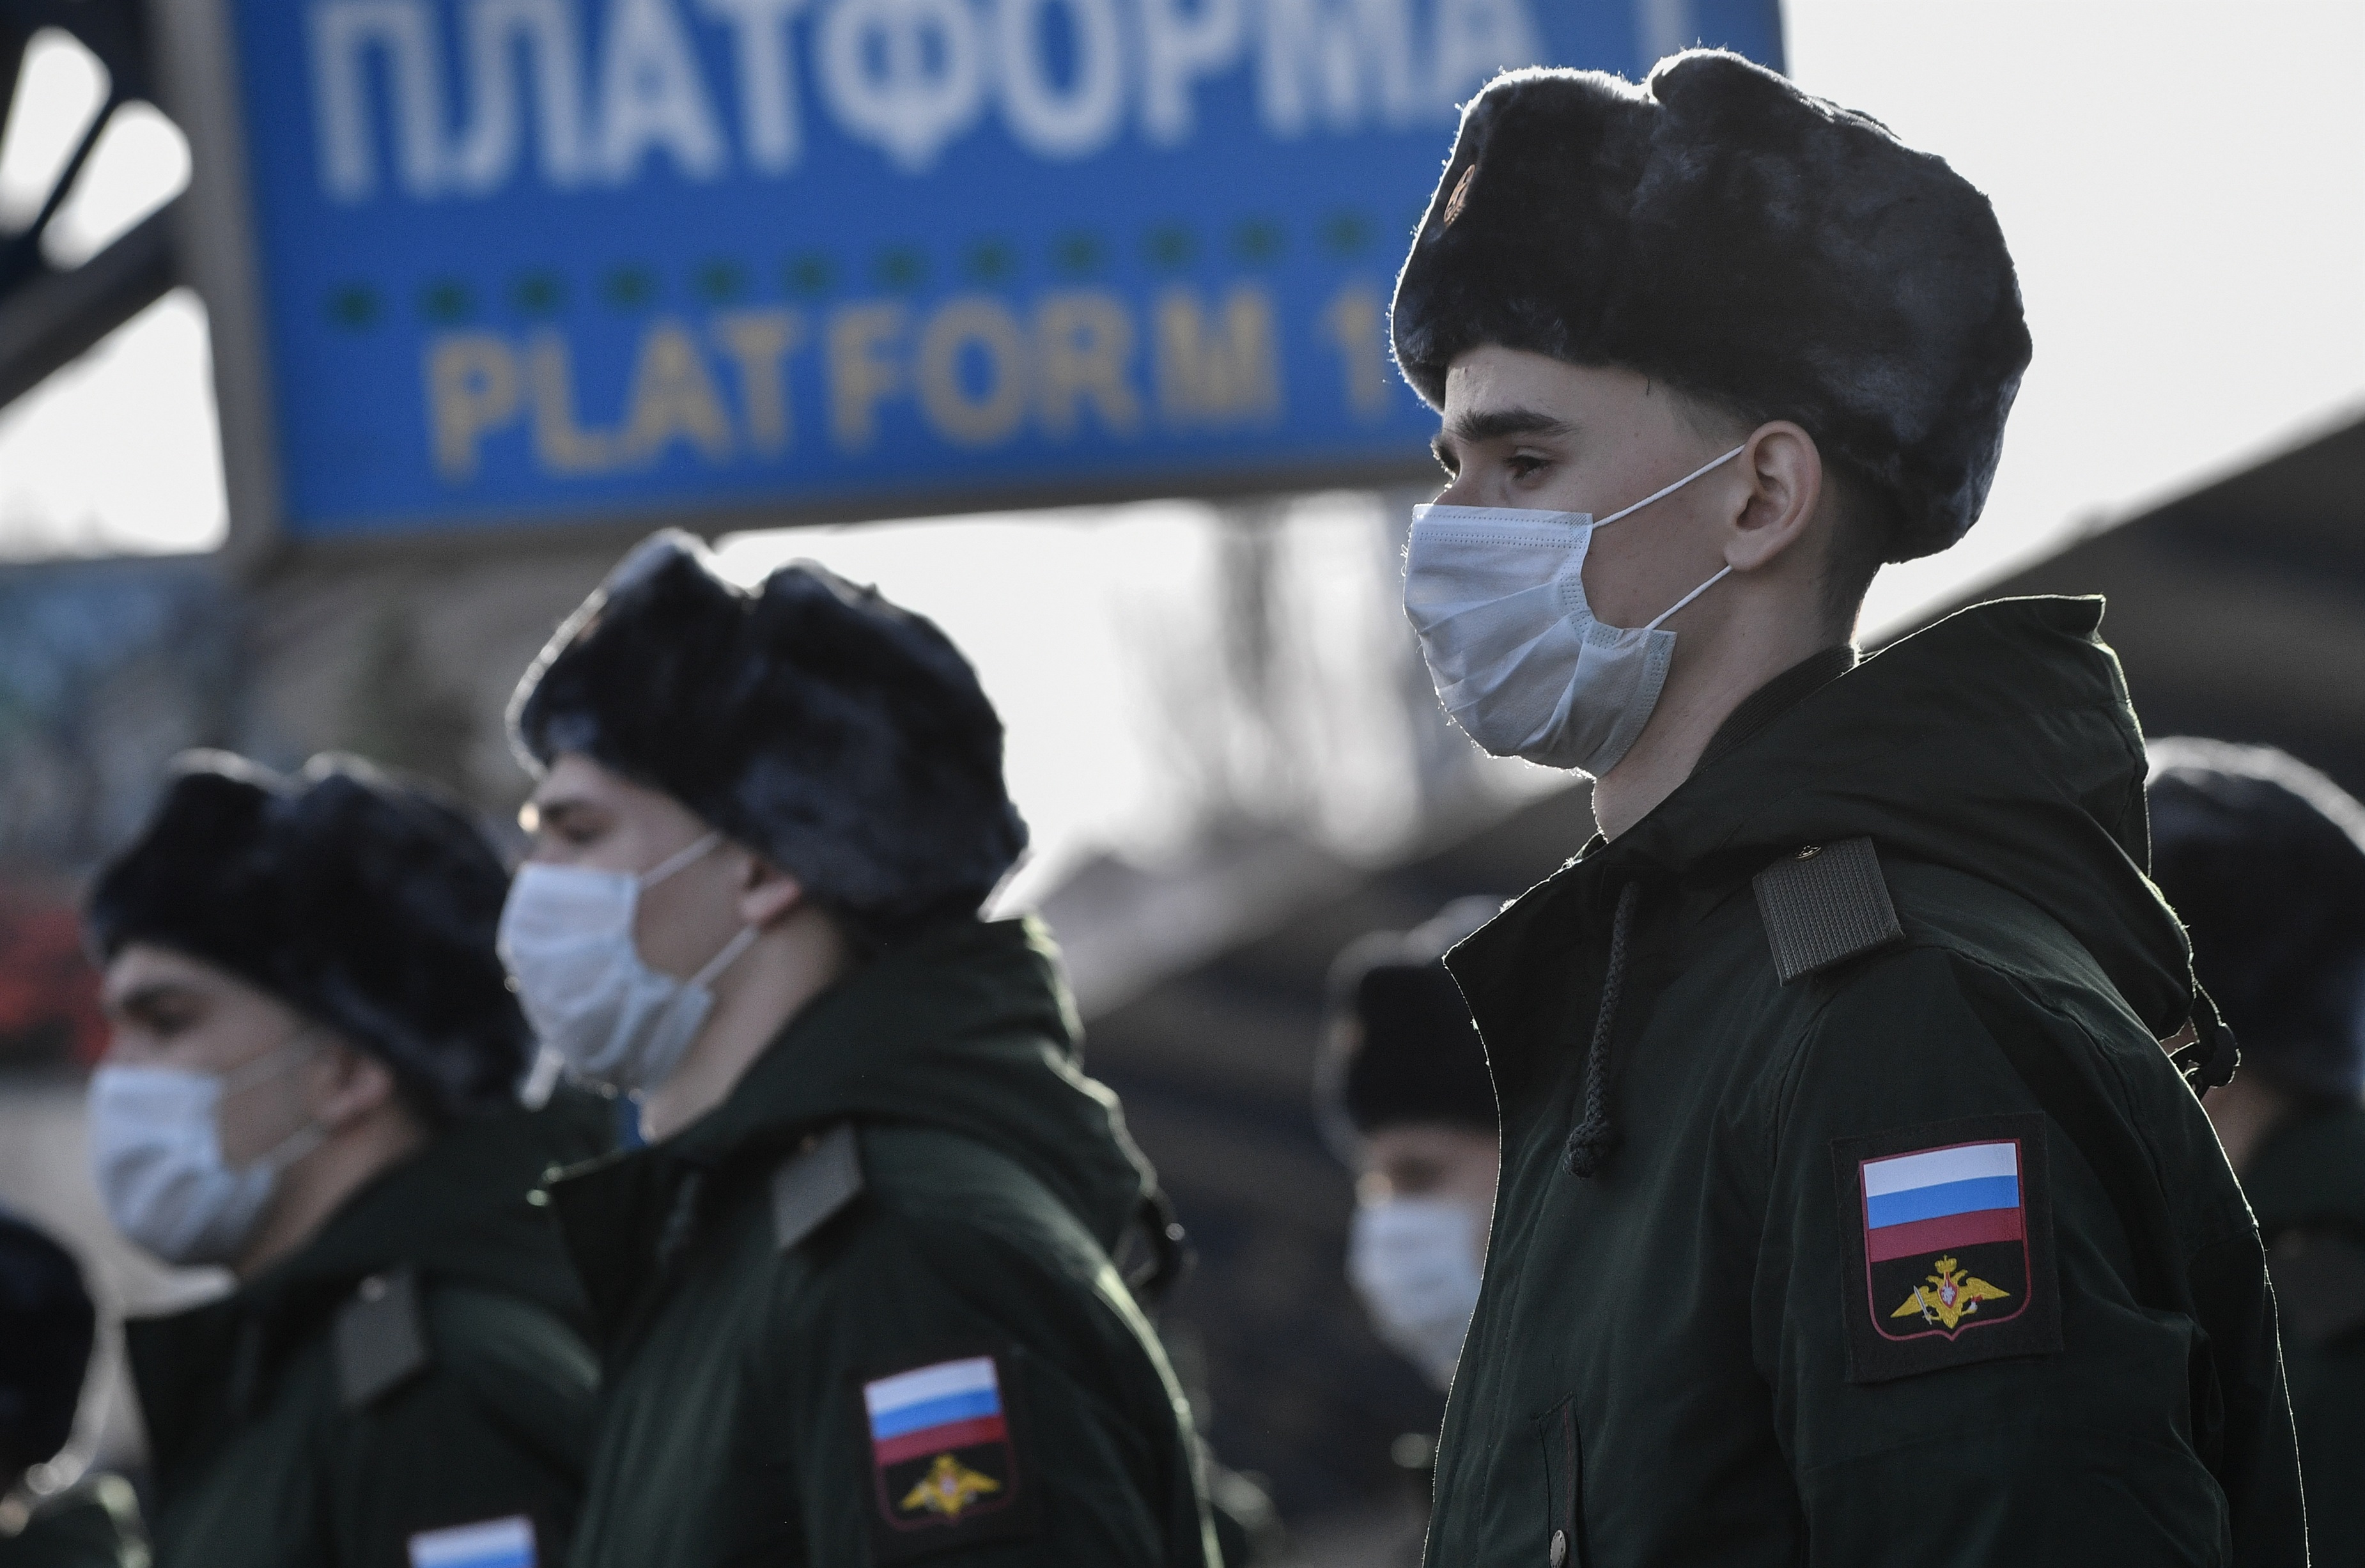 20-12-2021 Militares rusos en Crimea (Ucrania)
POLITICA EUROPA UCRANIA
KONSTANTIN MIHALCHEVSKIY / SPUTNIK / CONTACTOPHOTO
